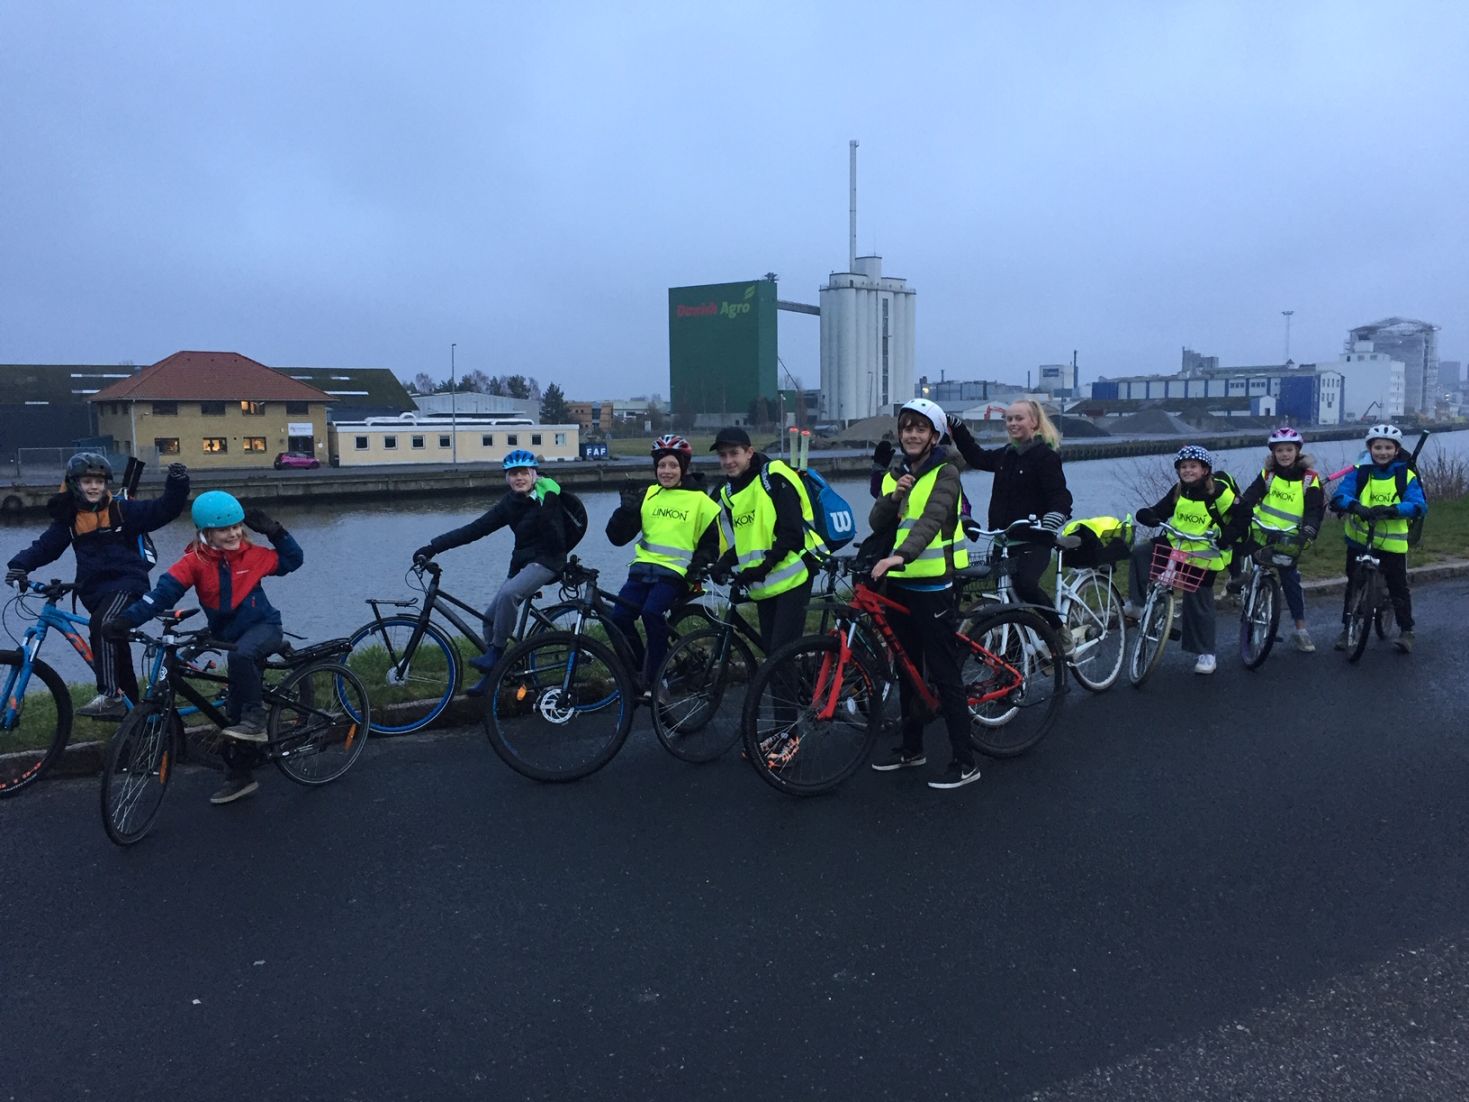 Indigenous screech Sprede Cykelbus” sparer klimaet for 800 km i bil om måneden - Danmarks  Naturfredningsforening